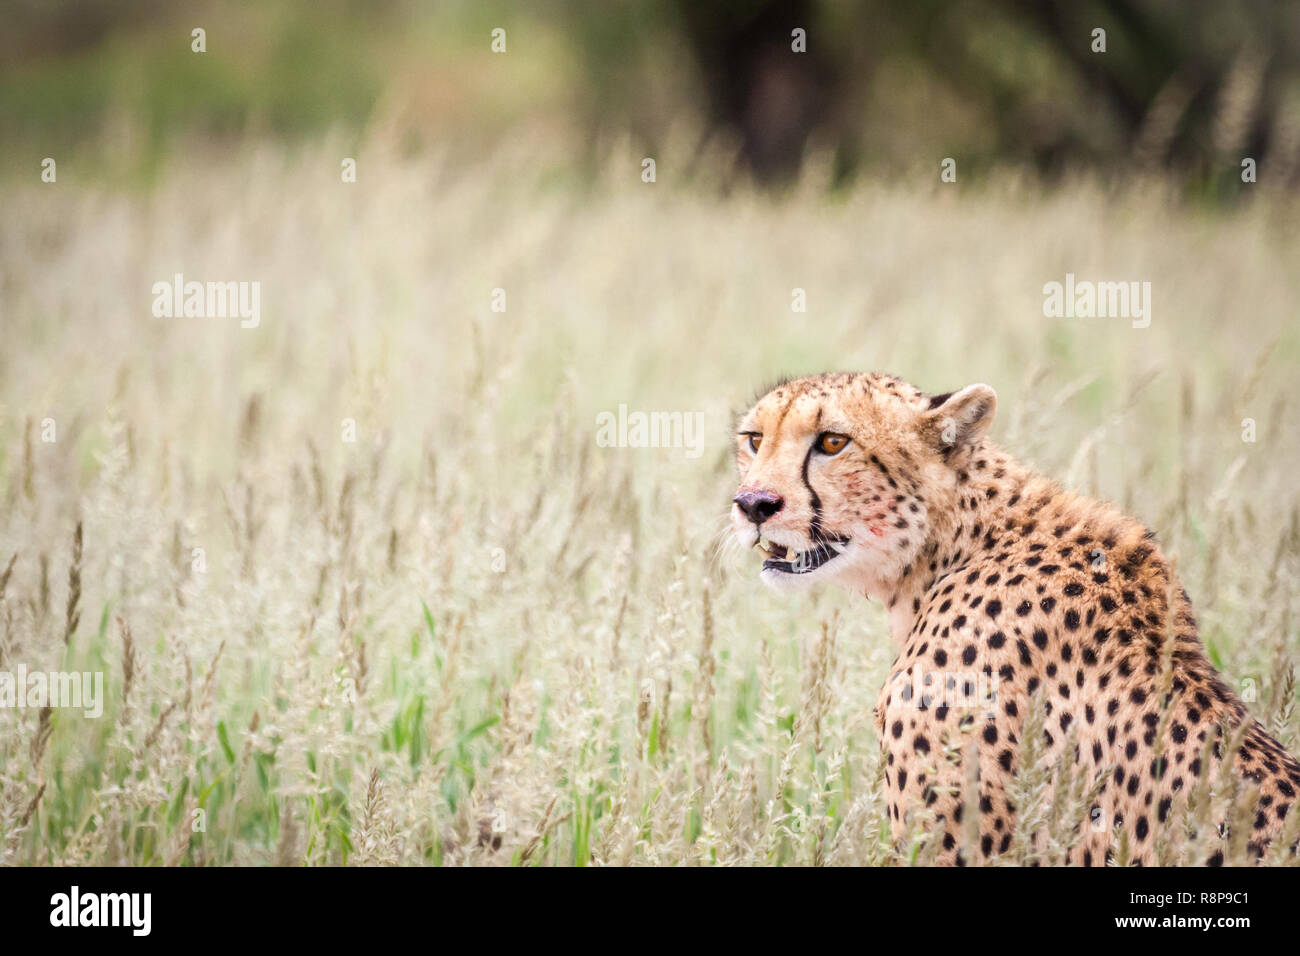 Portrait of cheetah in grass. Stock Photo